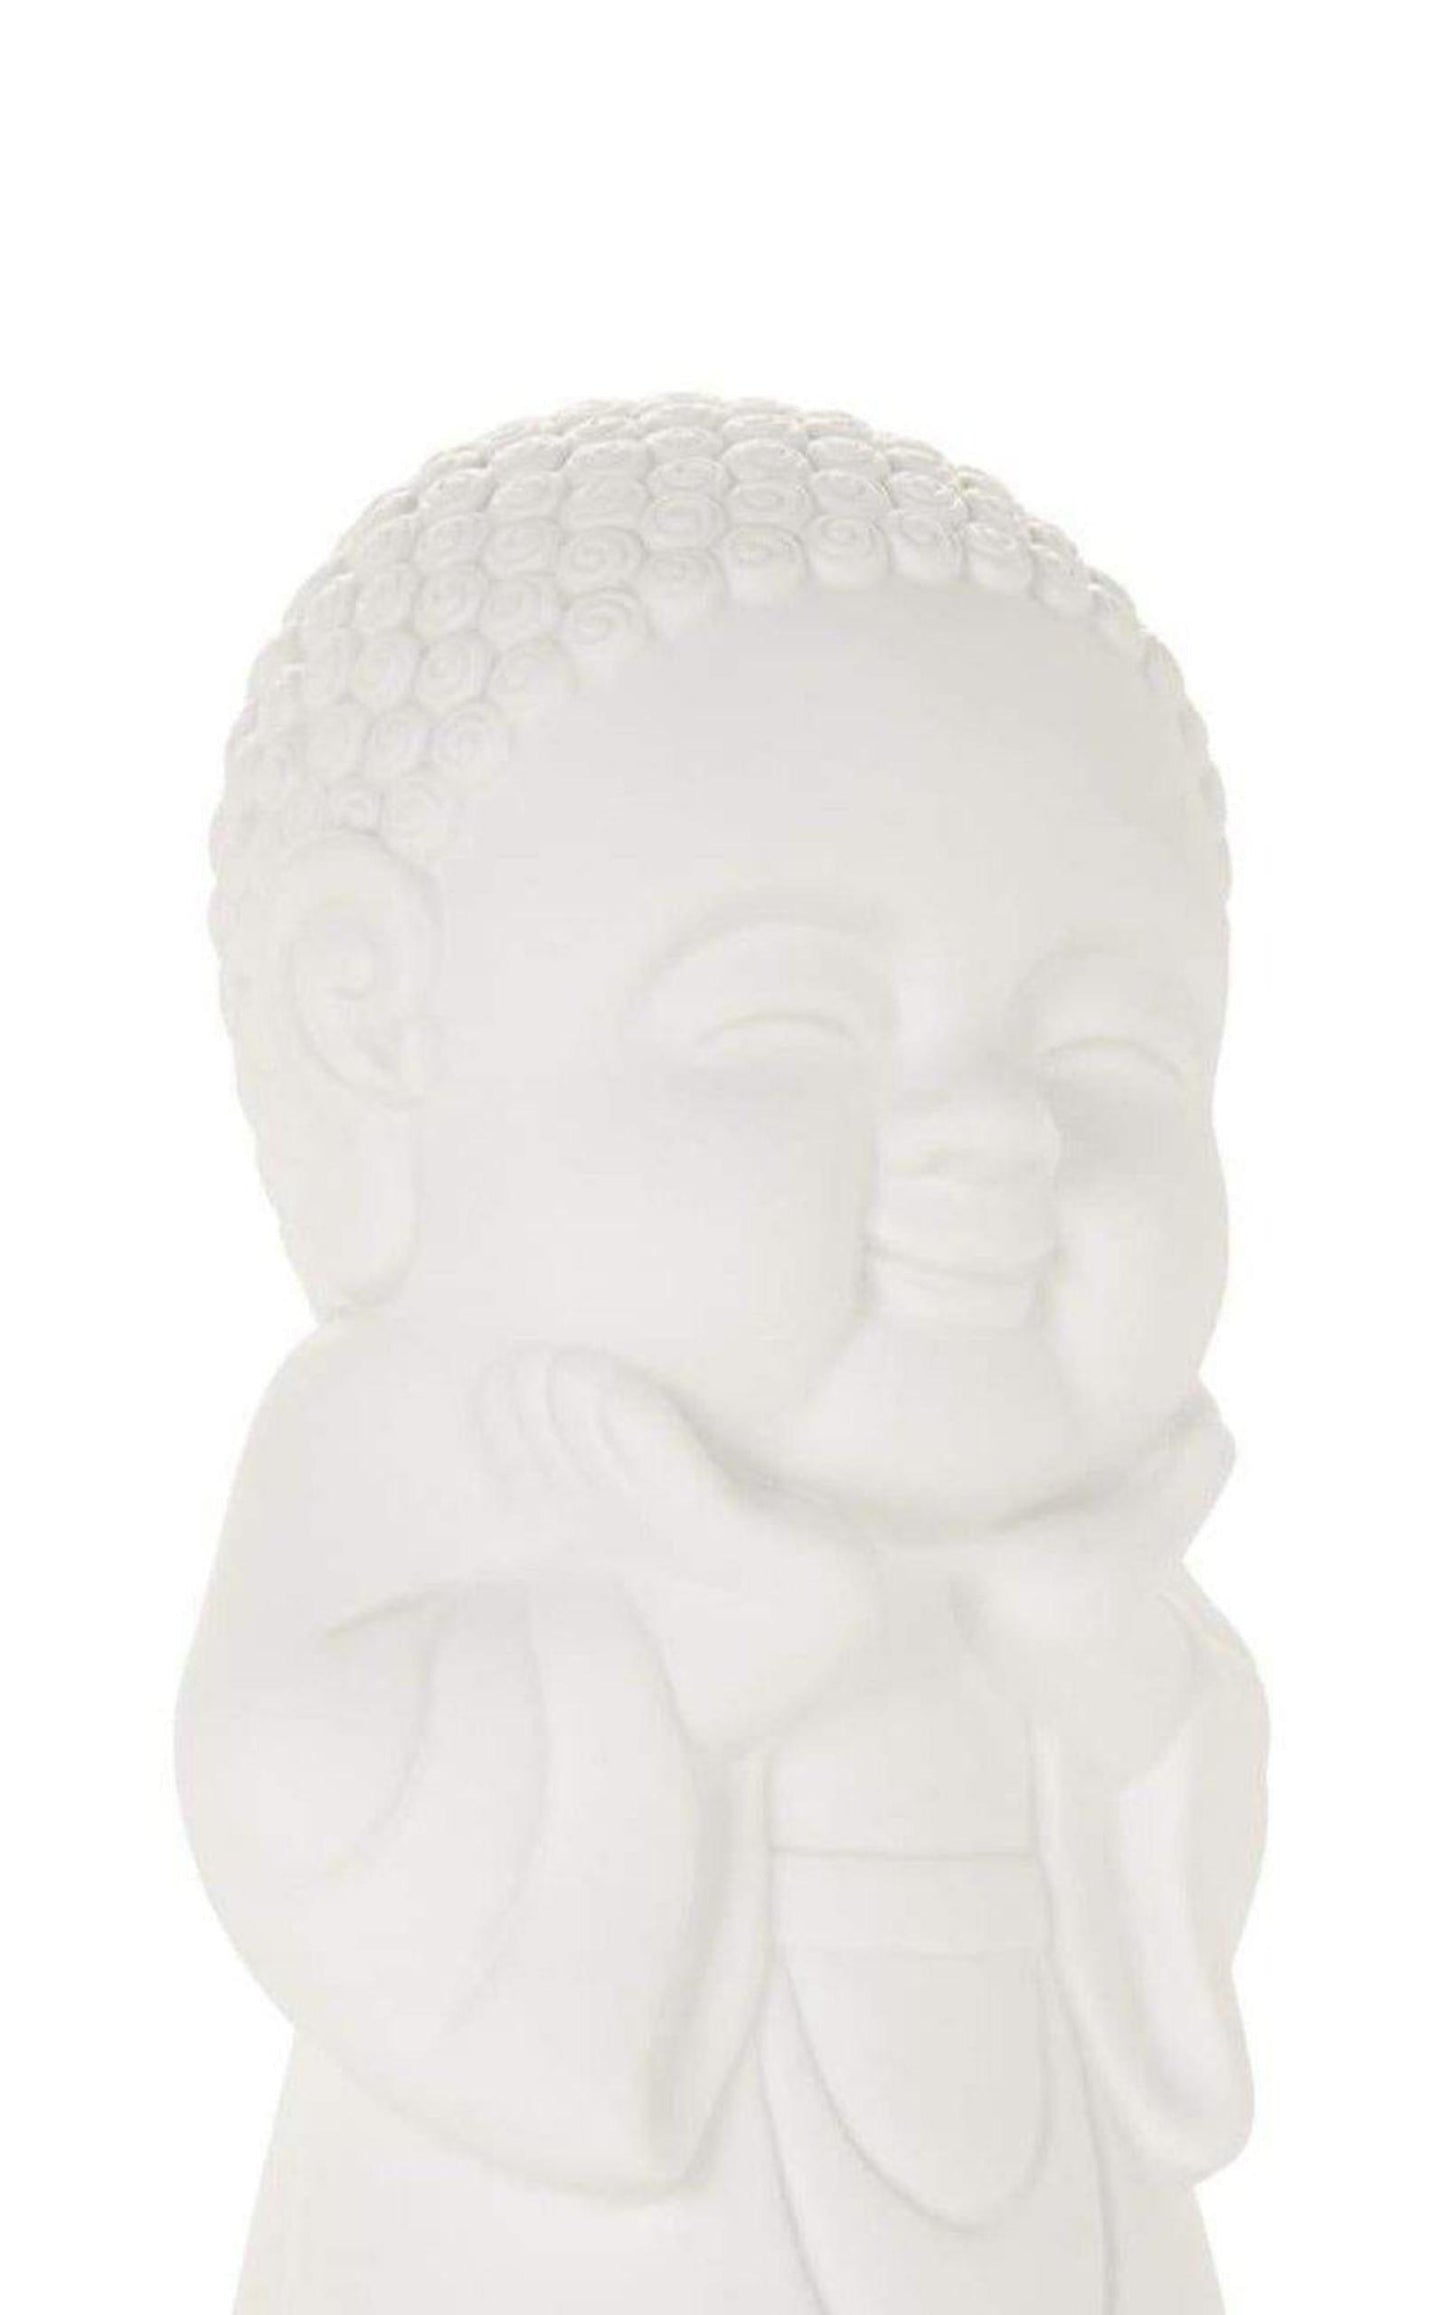 Happy Buddha Ceramic Light